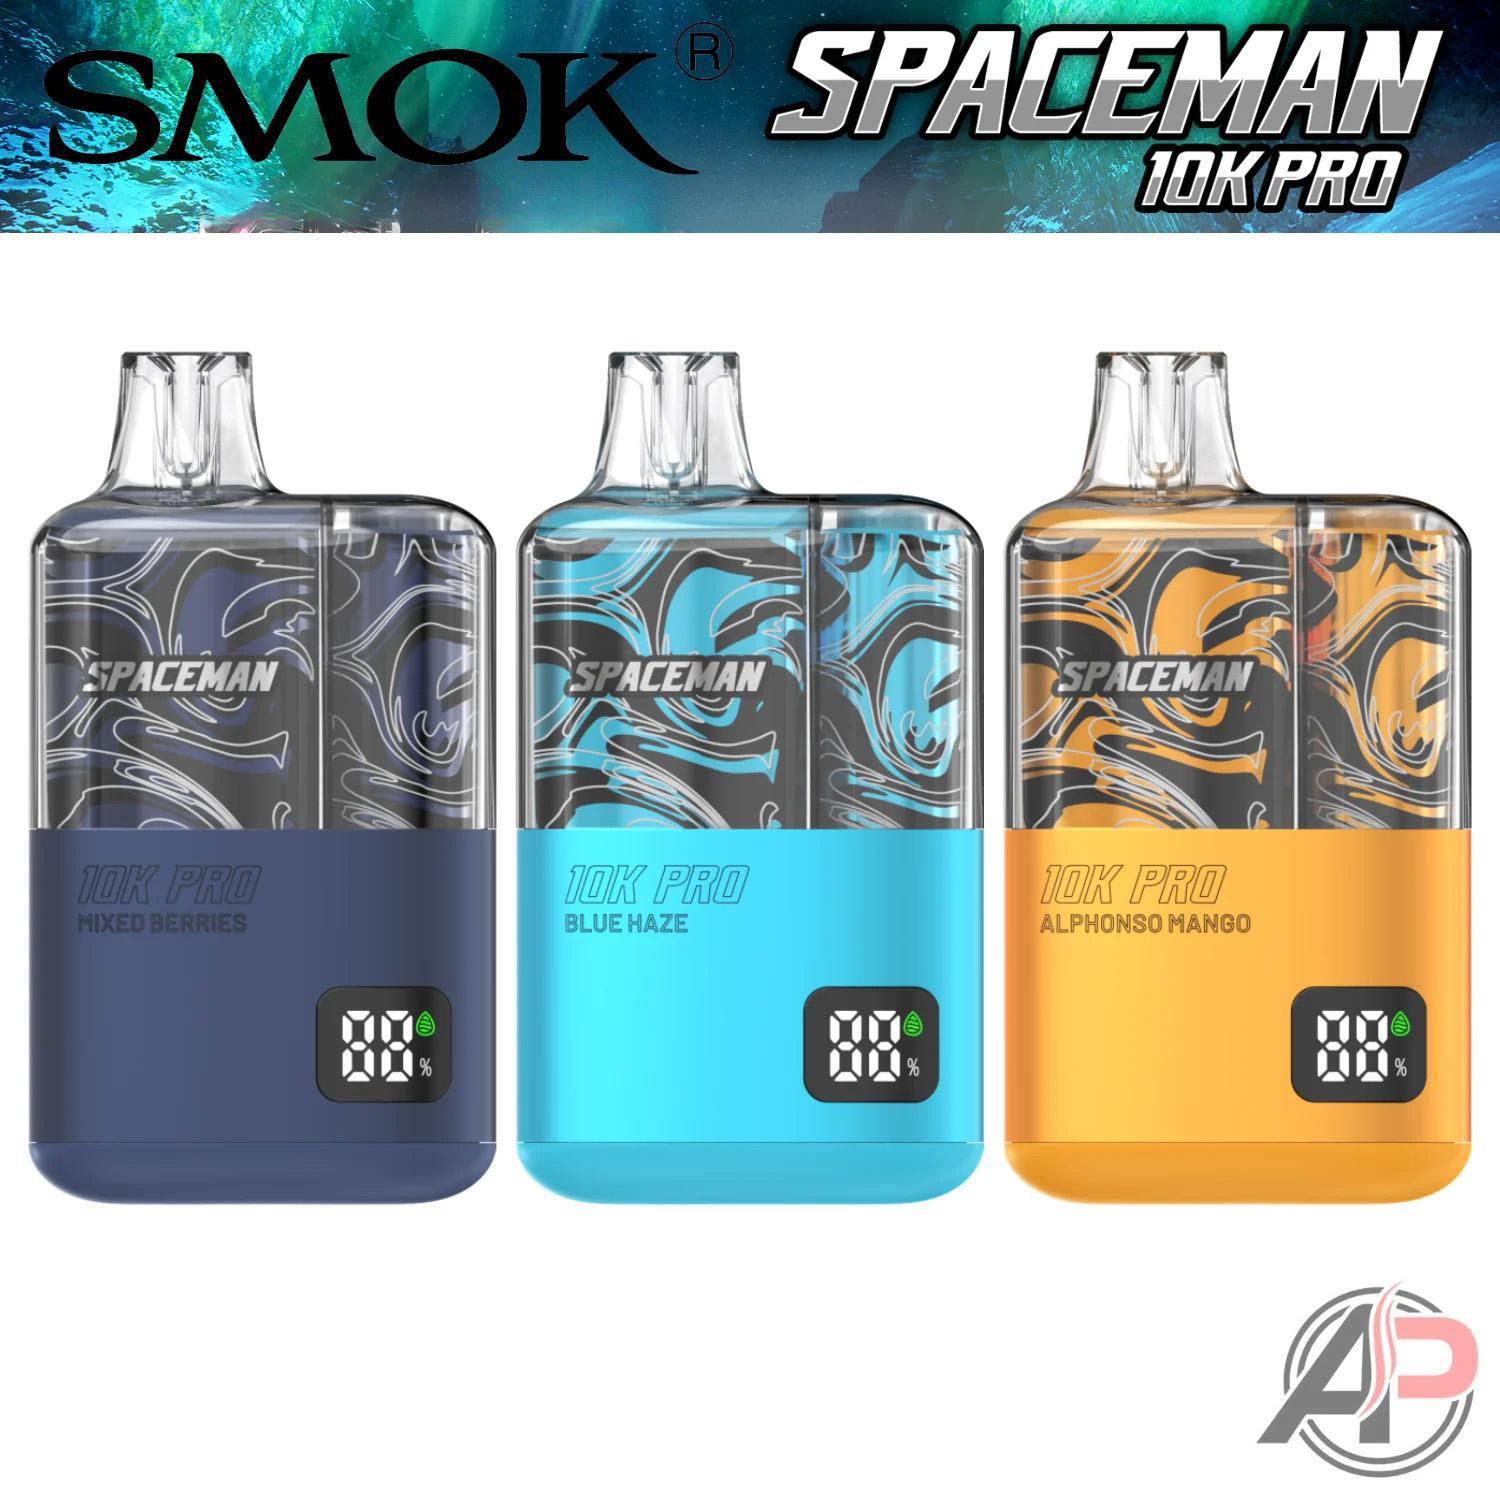 Smok Spaceman 10K Pro | Stogz | Find Your High